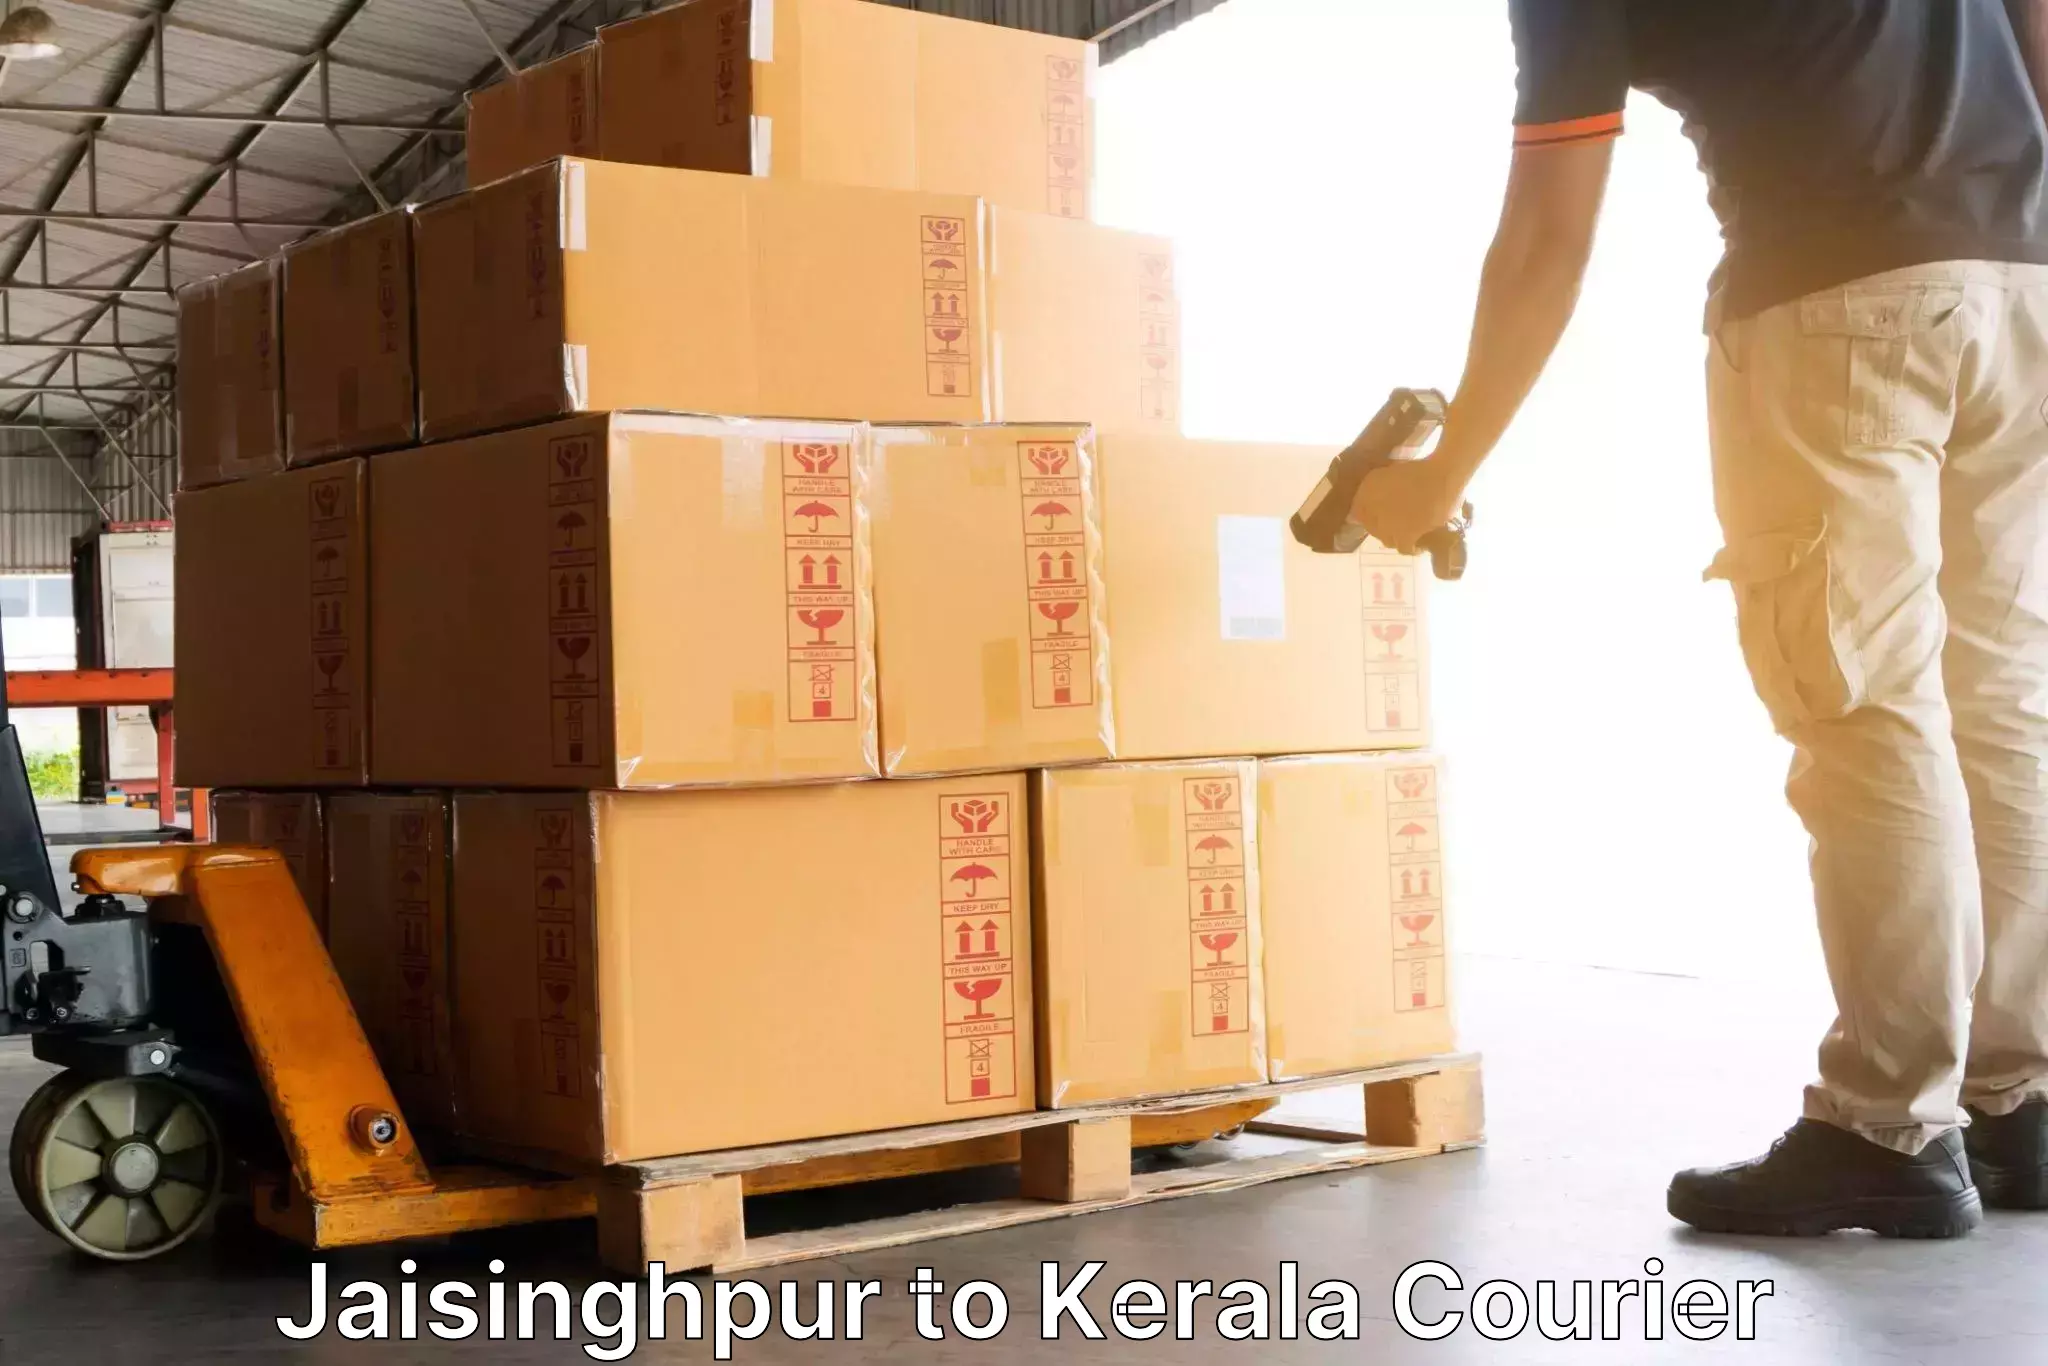 Diverse delivery methods in Jaisinghpur to Thrissur